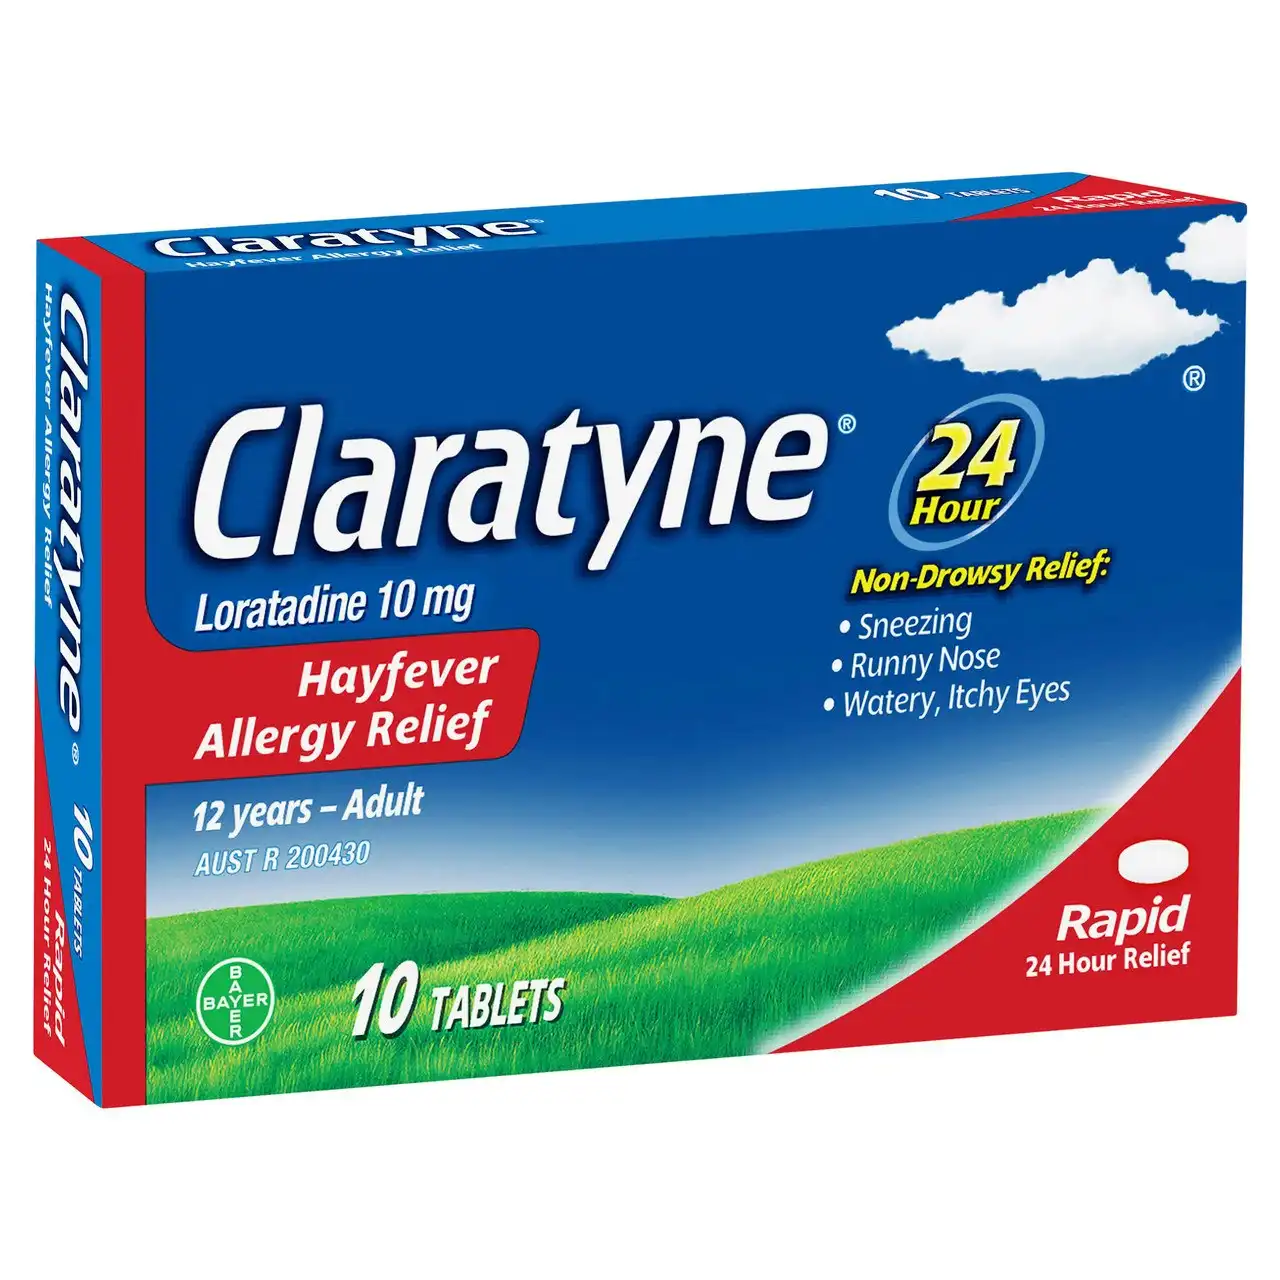 CLARATYNE Allergy Hayfever Relief Antihistamine Tablets 10 pack